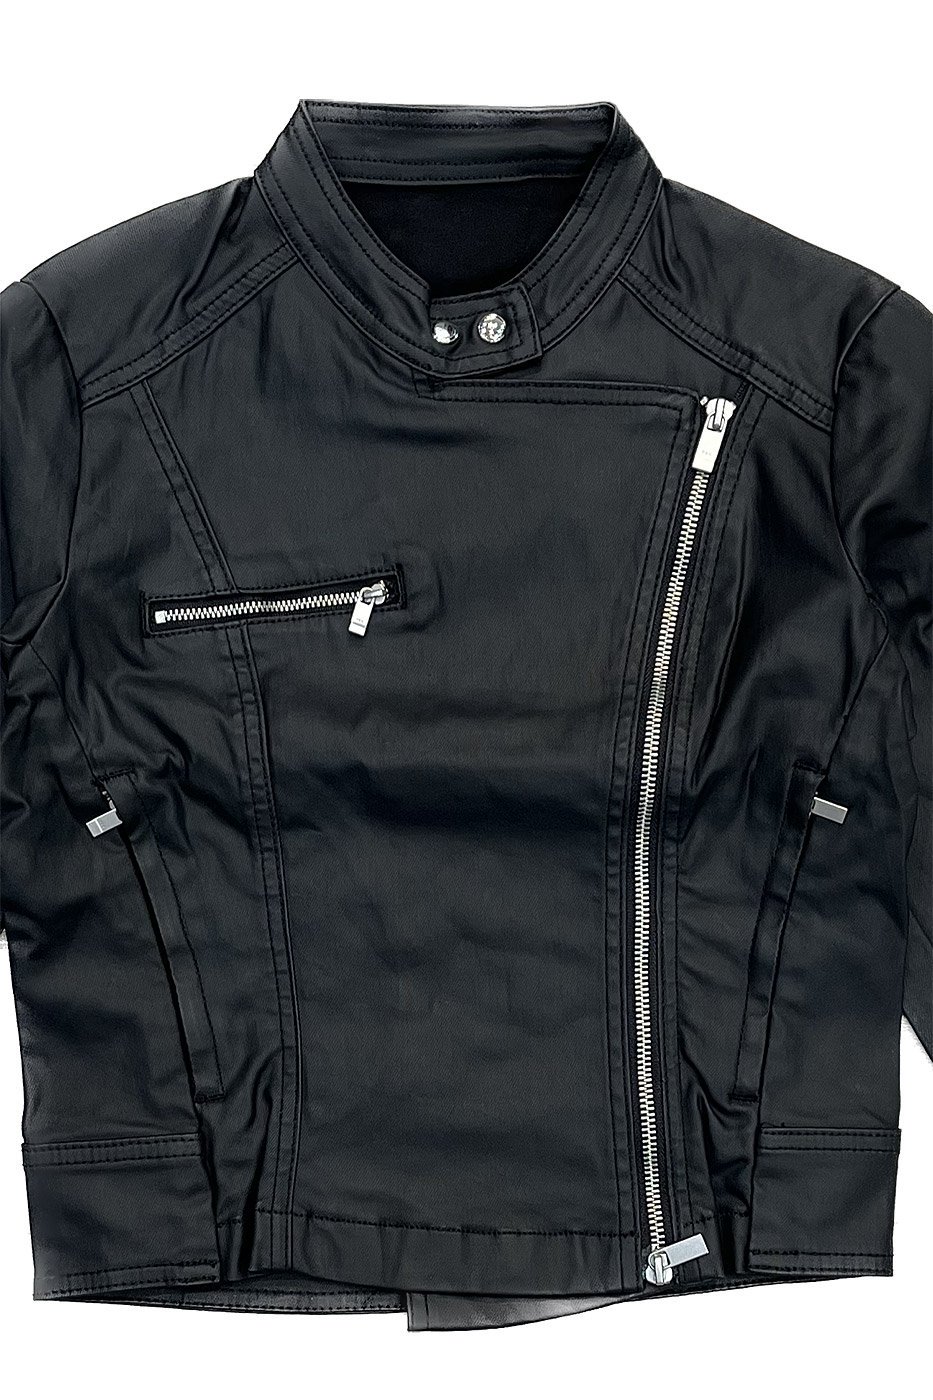 INDIMARK ウレタンコーティング ジャケット ブラック WJ140